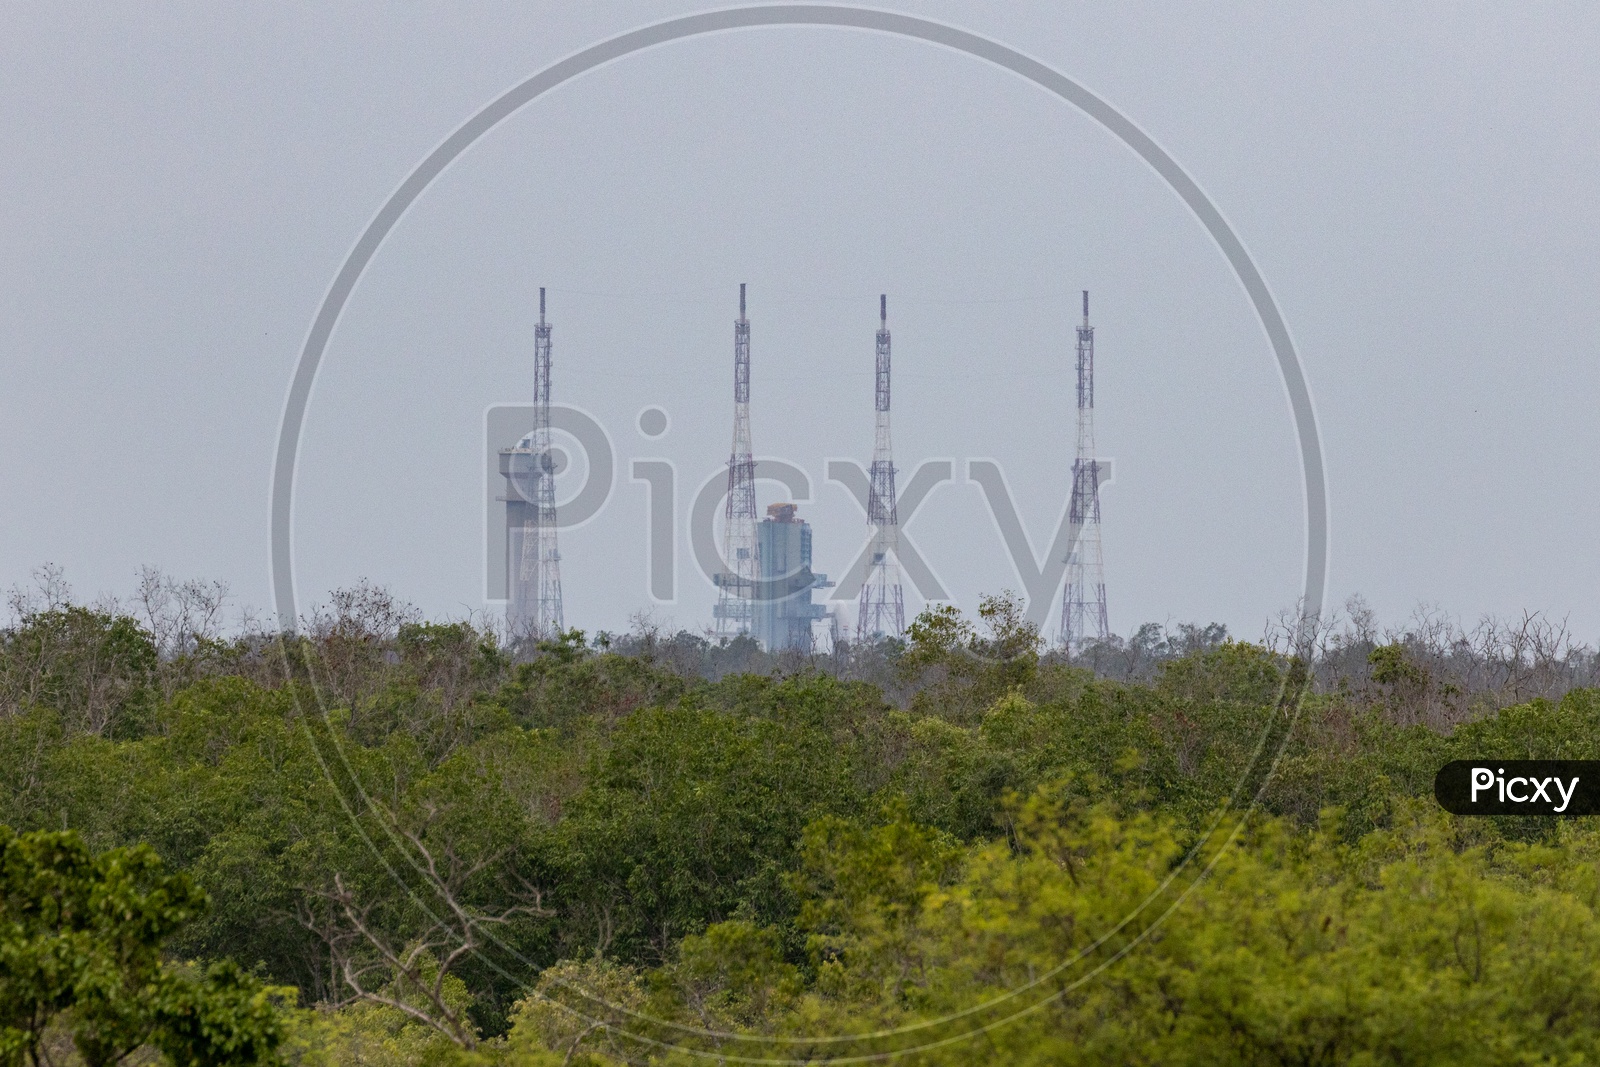 GSLV Mk III  M1  Or Chandrayaan 2  Spacecraft or Rocket  On   Launch pad  At Satish Dhawan Space Centre  SHAR In Sriharikota